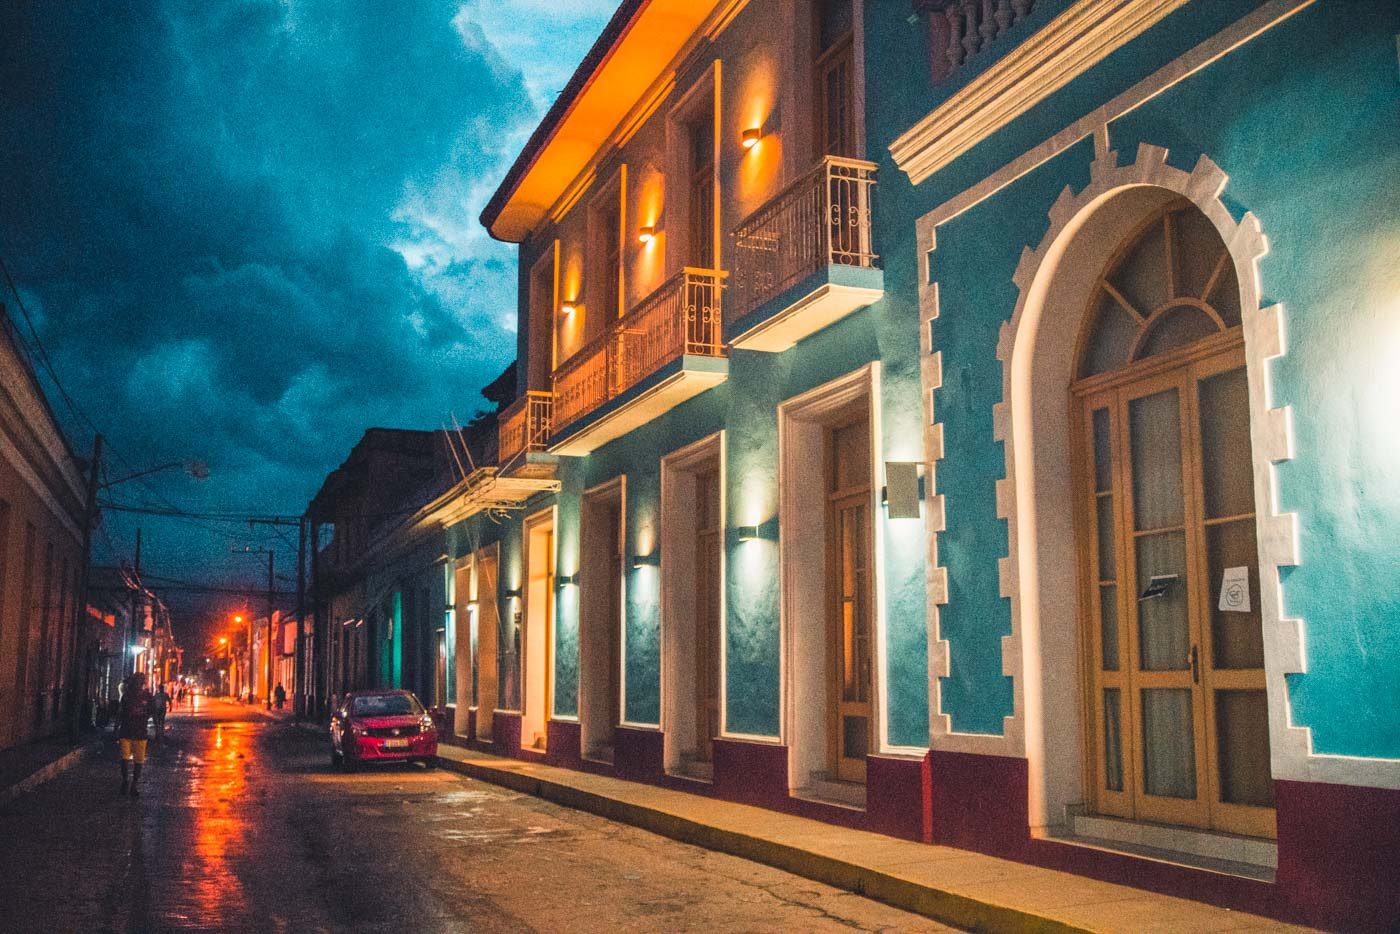 Old architecture in Trinidad, Cuba